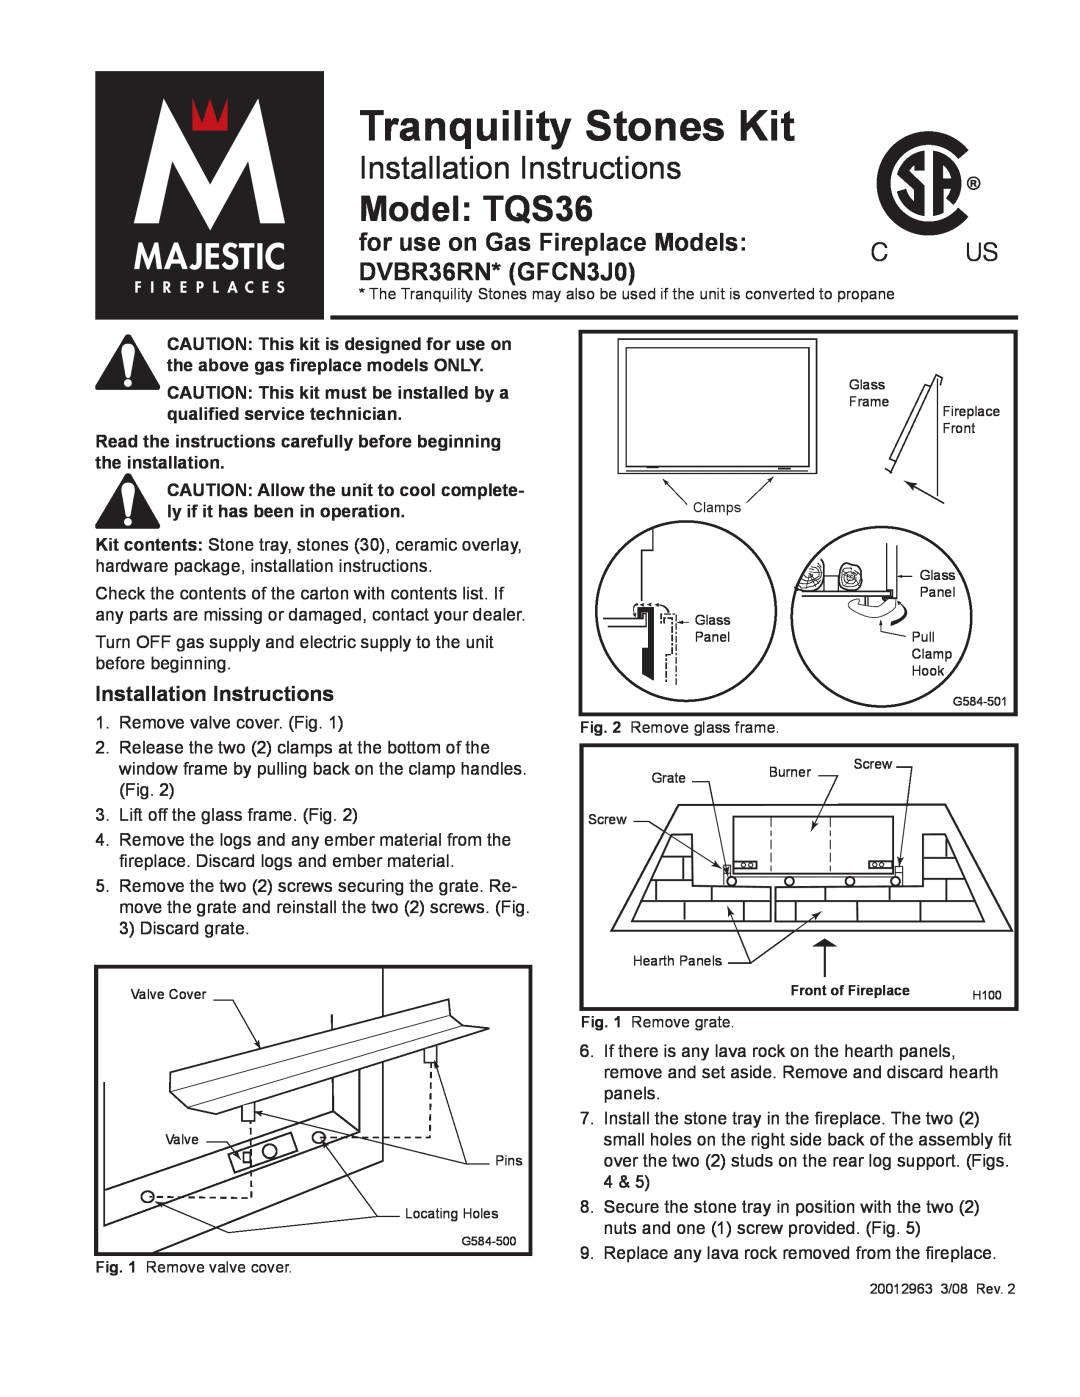 Majestic Appliances installation instructions Model TQS36, Installation Instructions, Tranquility Stones Kit 